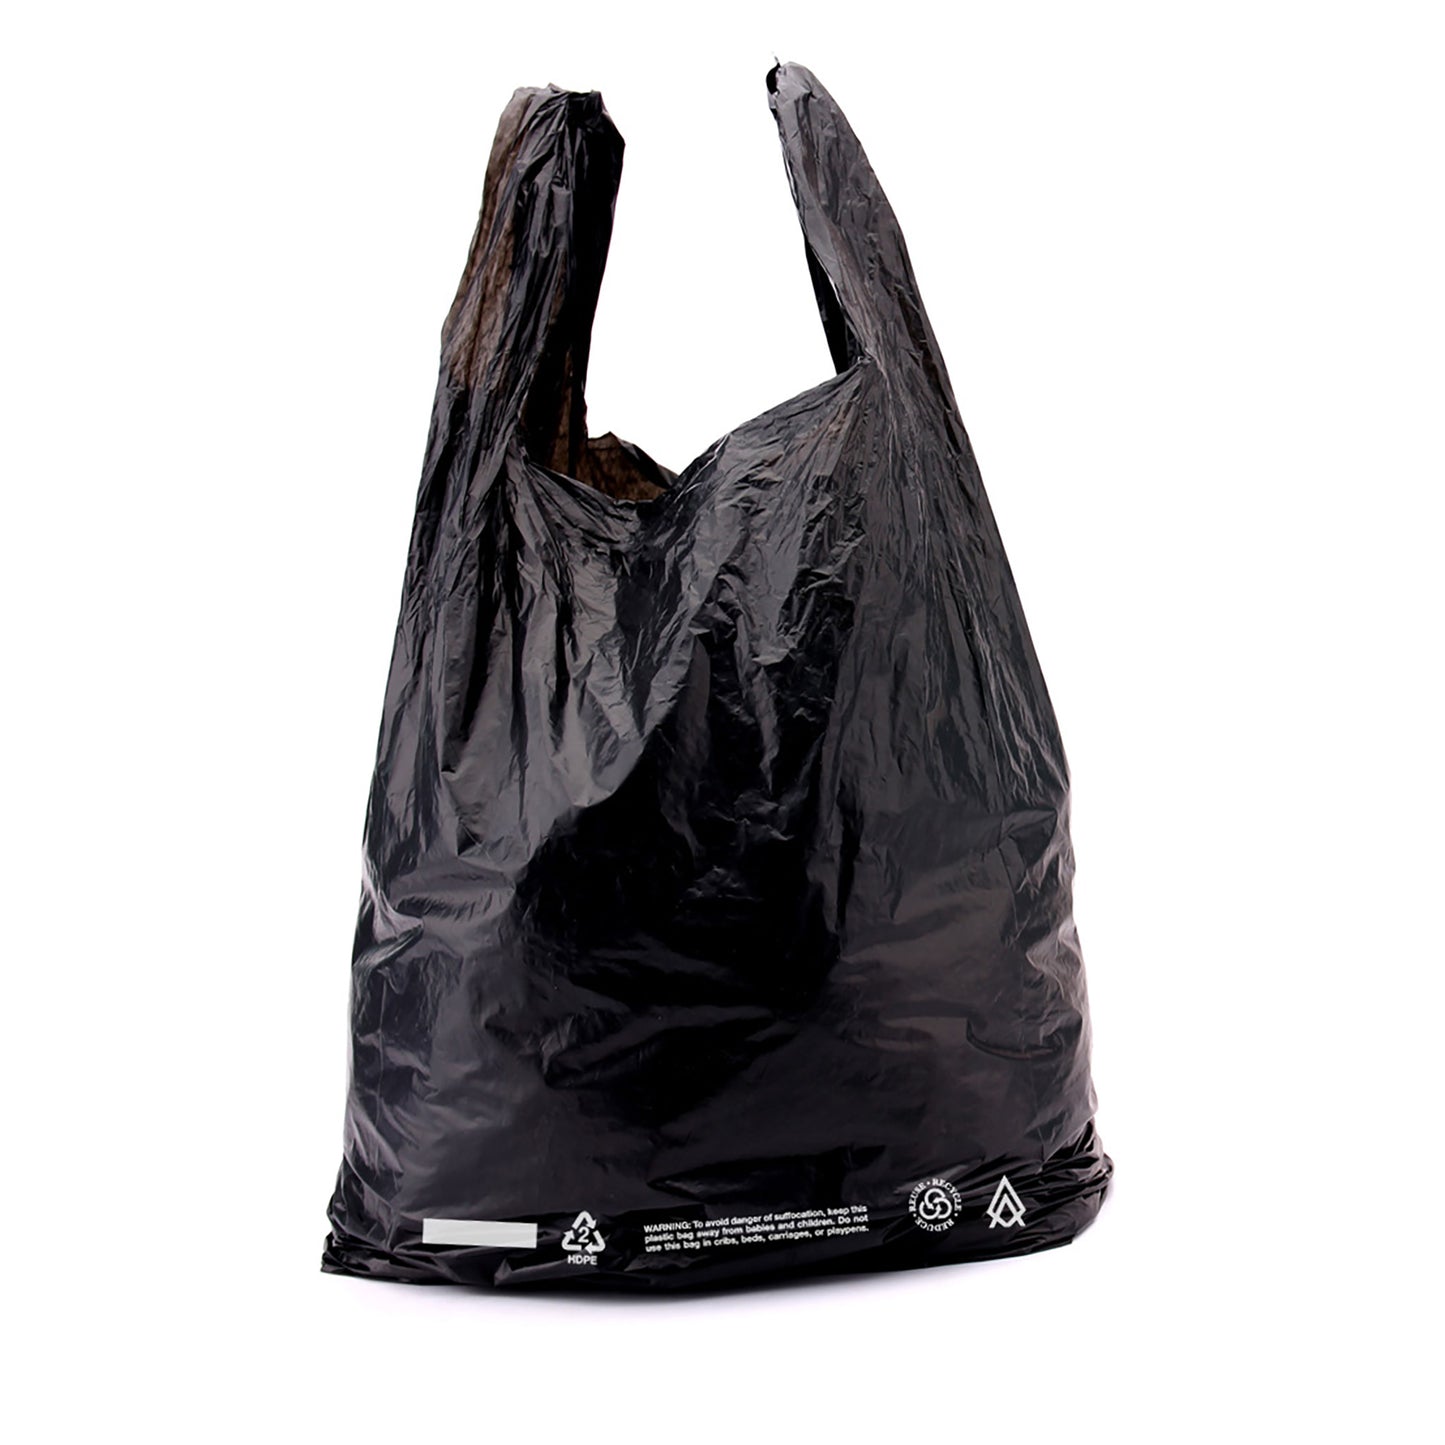 T-Shirt Bag - 20# Mini-Tote - Black Plastic Warning Language - Flat Pack - 1,000/Case